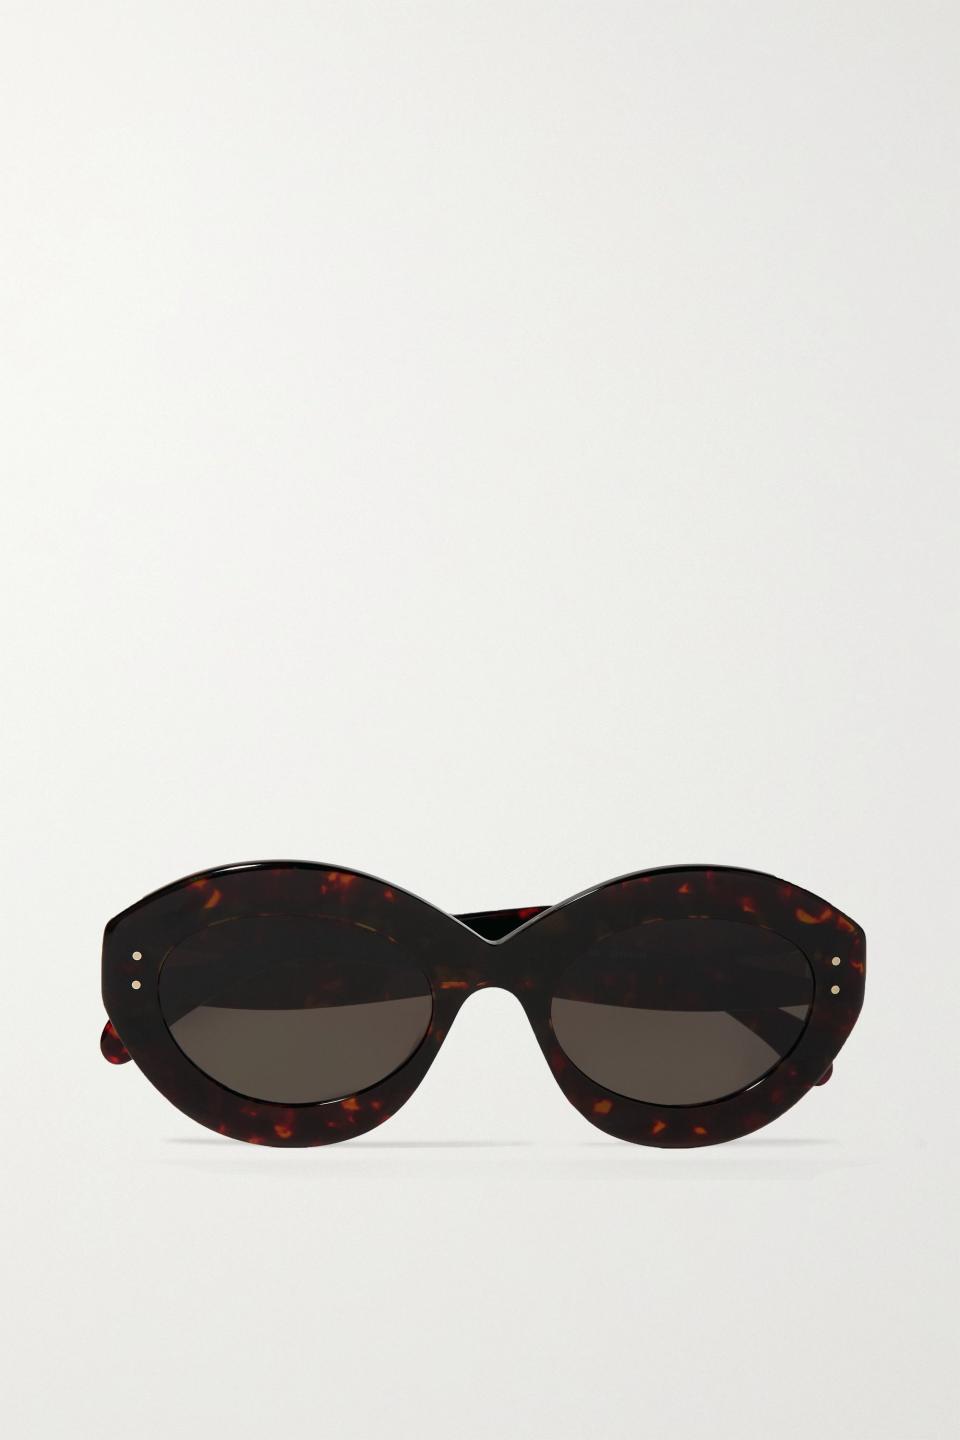 17) Round-Frame Tortoiseshell Acetate Sunglasses